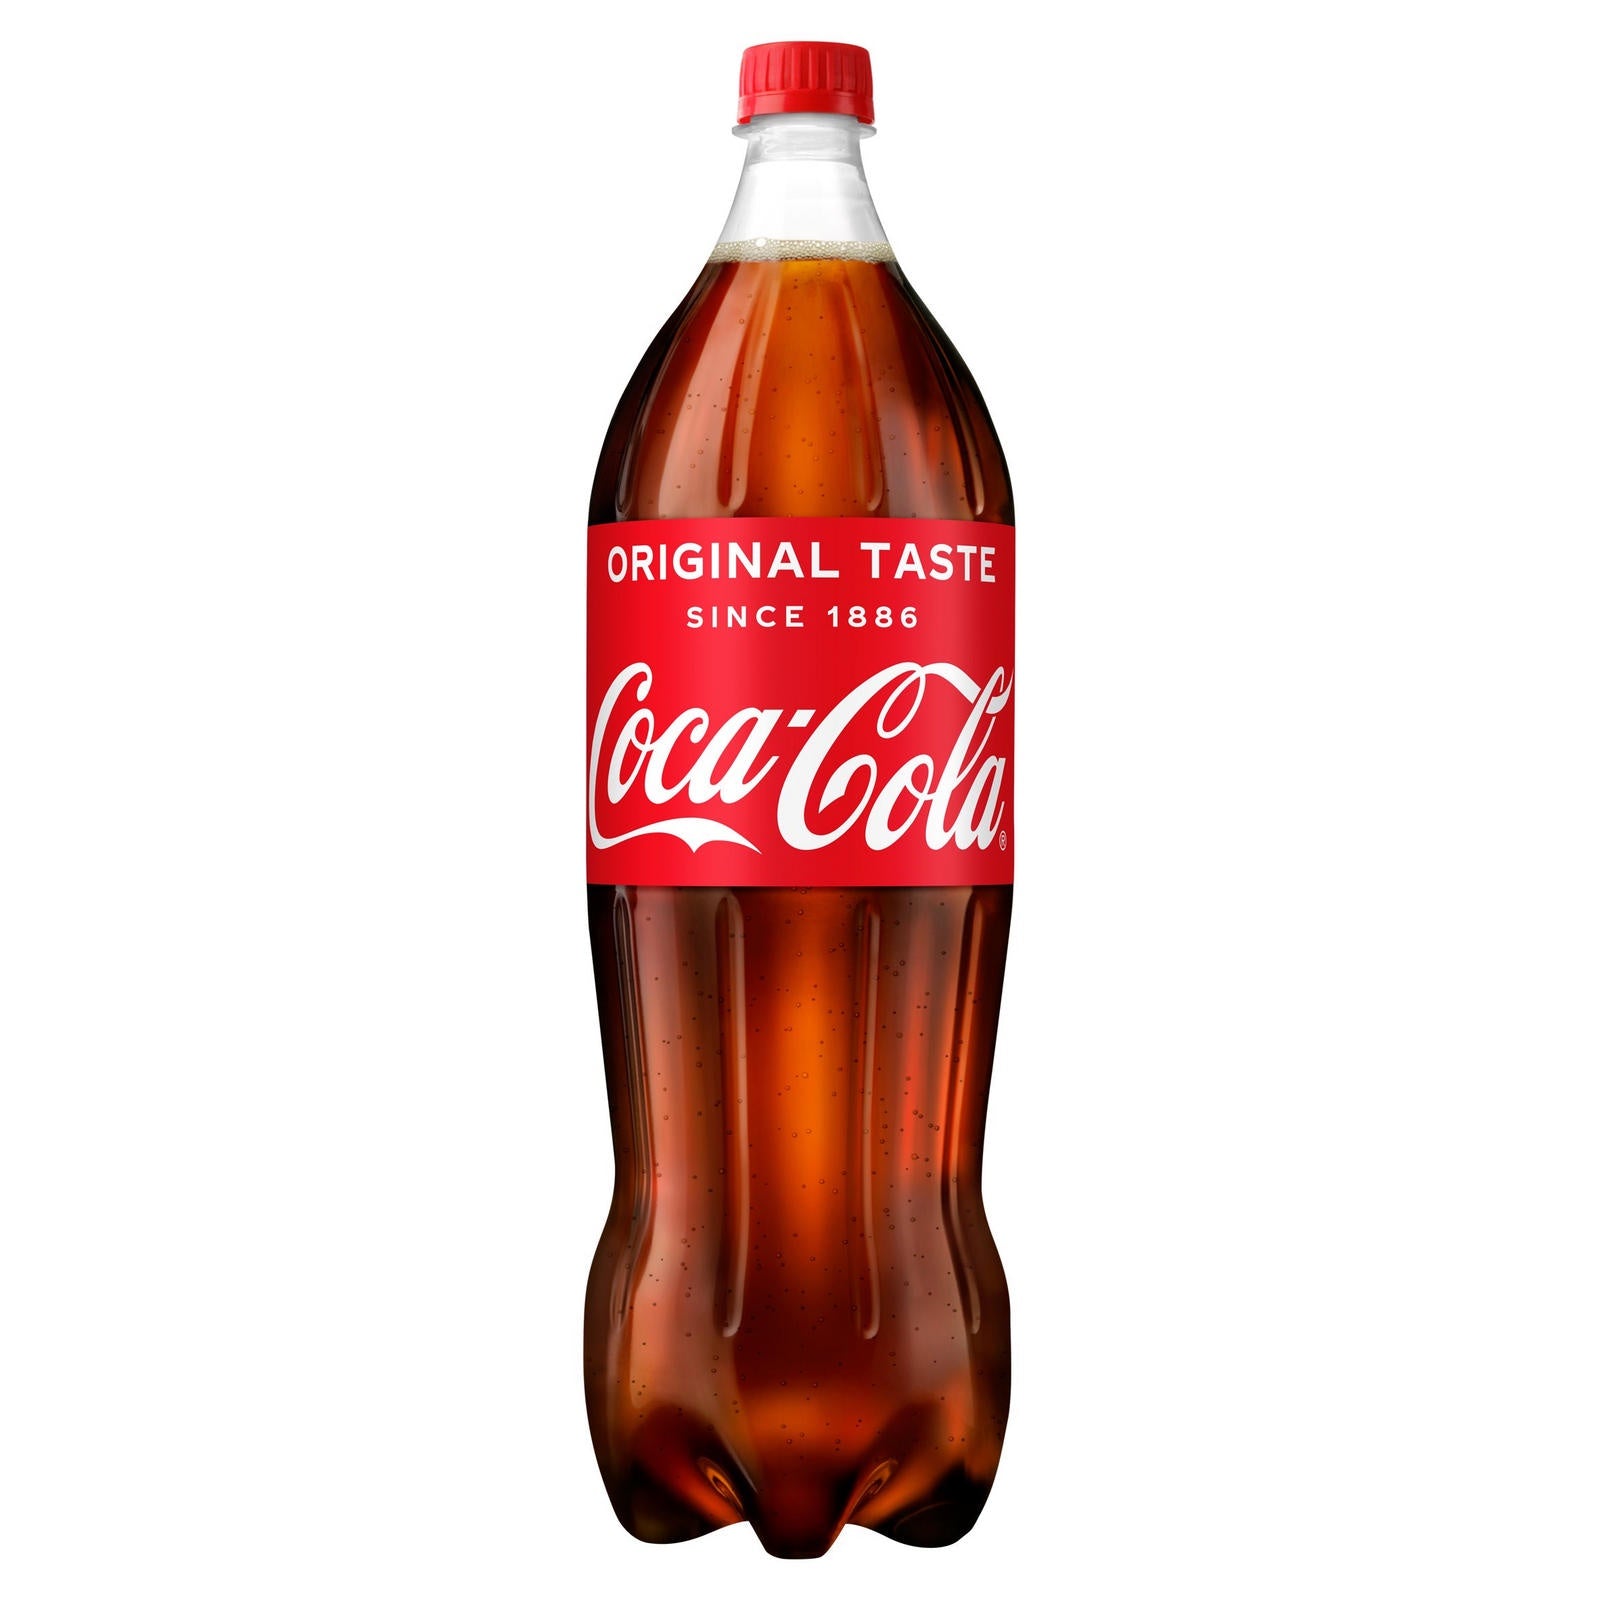 Coca Cola Original Bottle 1.75L